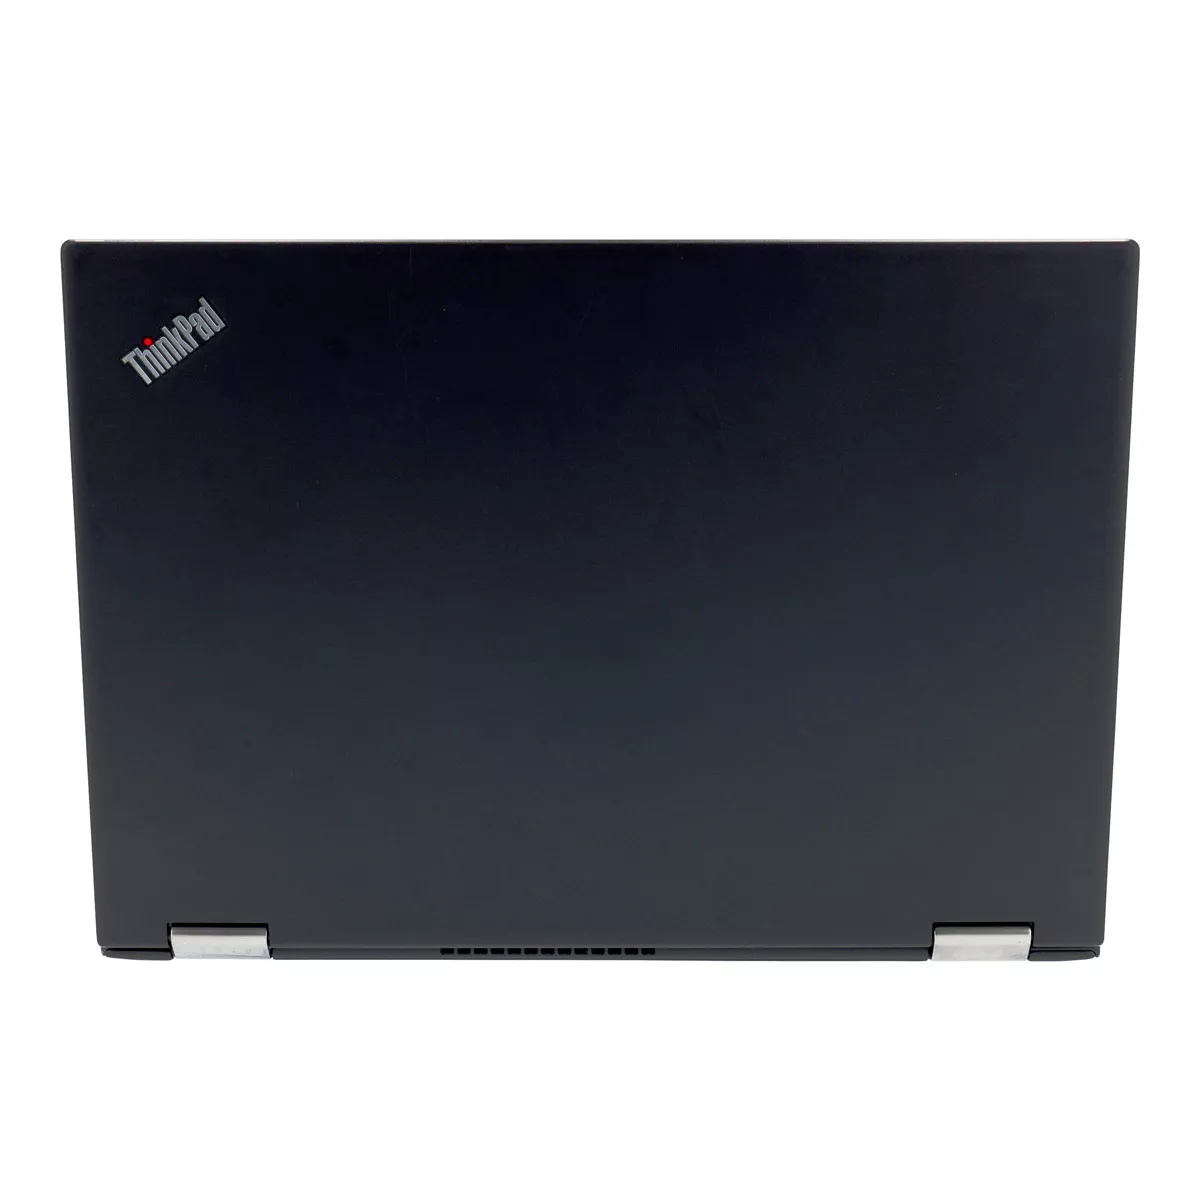 Lenovo ThinkPad X380 Yoga Core i5 8350U Full-HD Touch 16 GB 500 GB nVME M.2 SSD Webcam A+